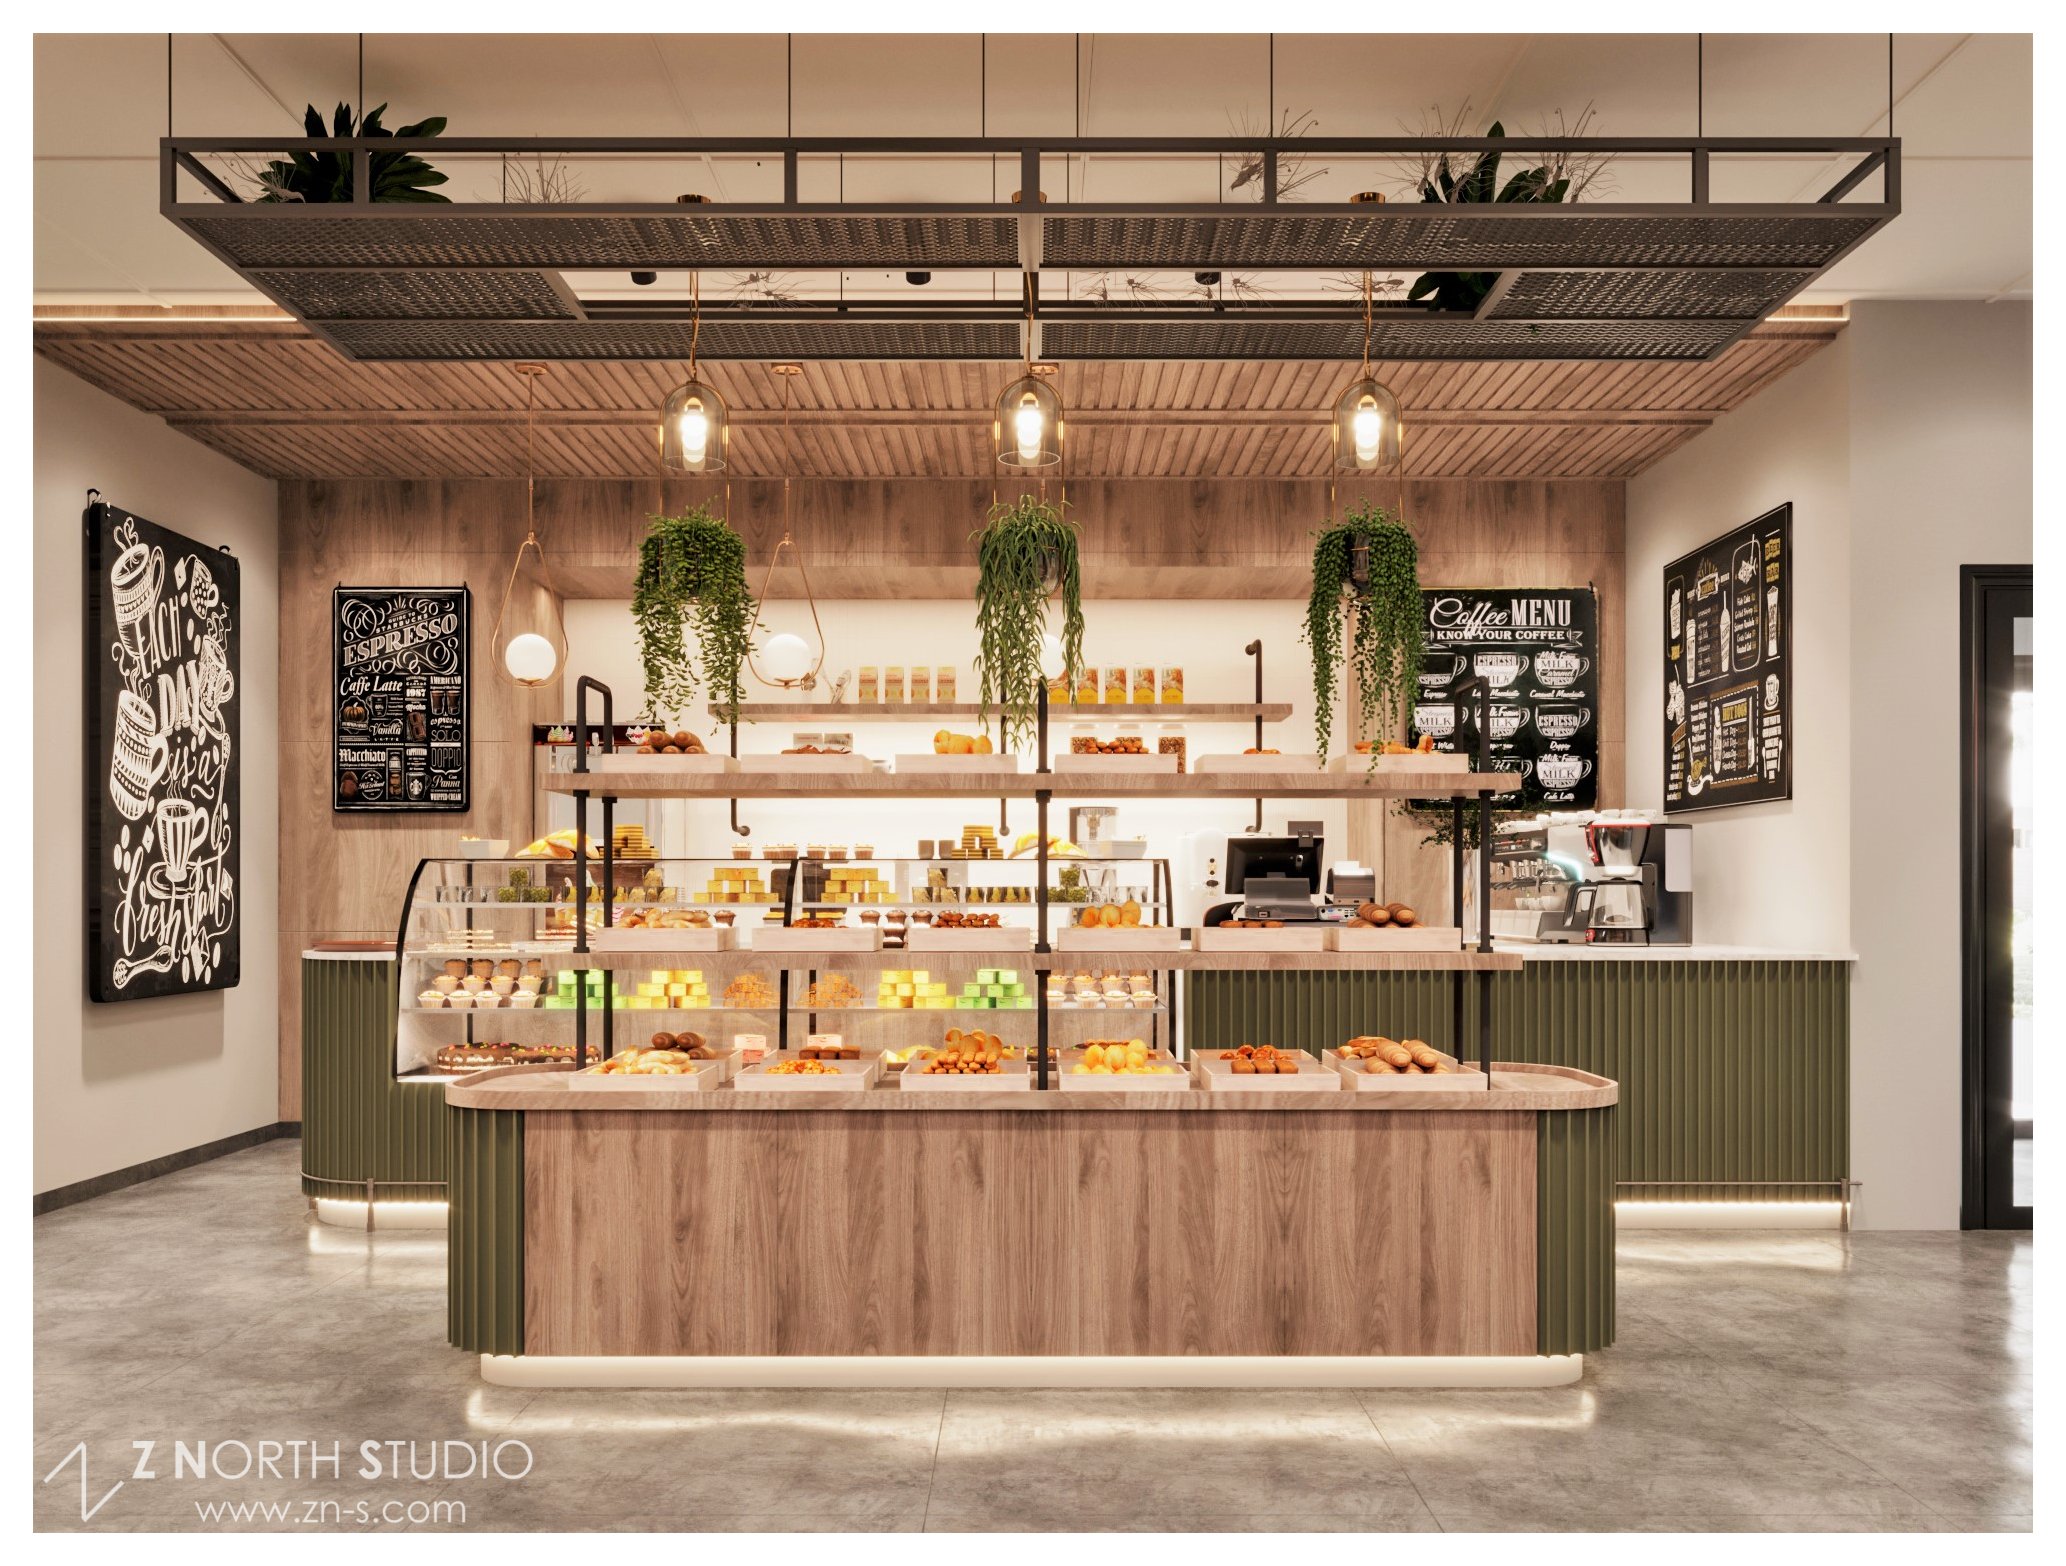 shilla bakery usa interior design z north Studio dc (2).jpg